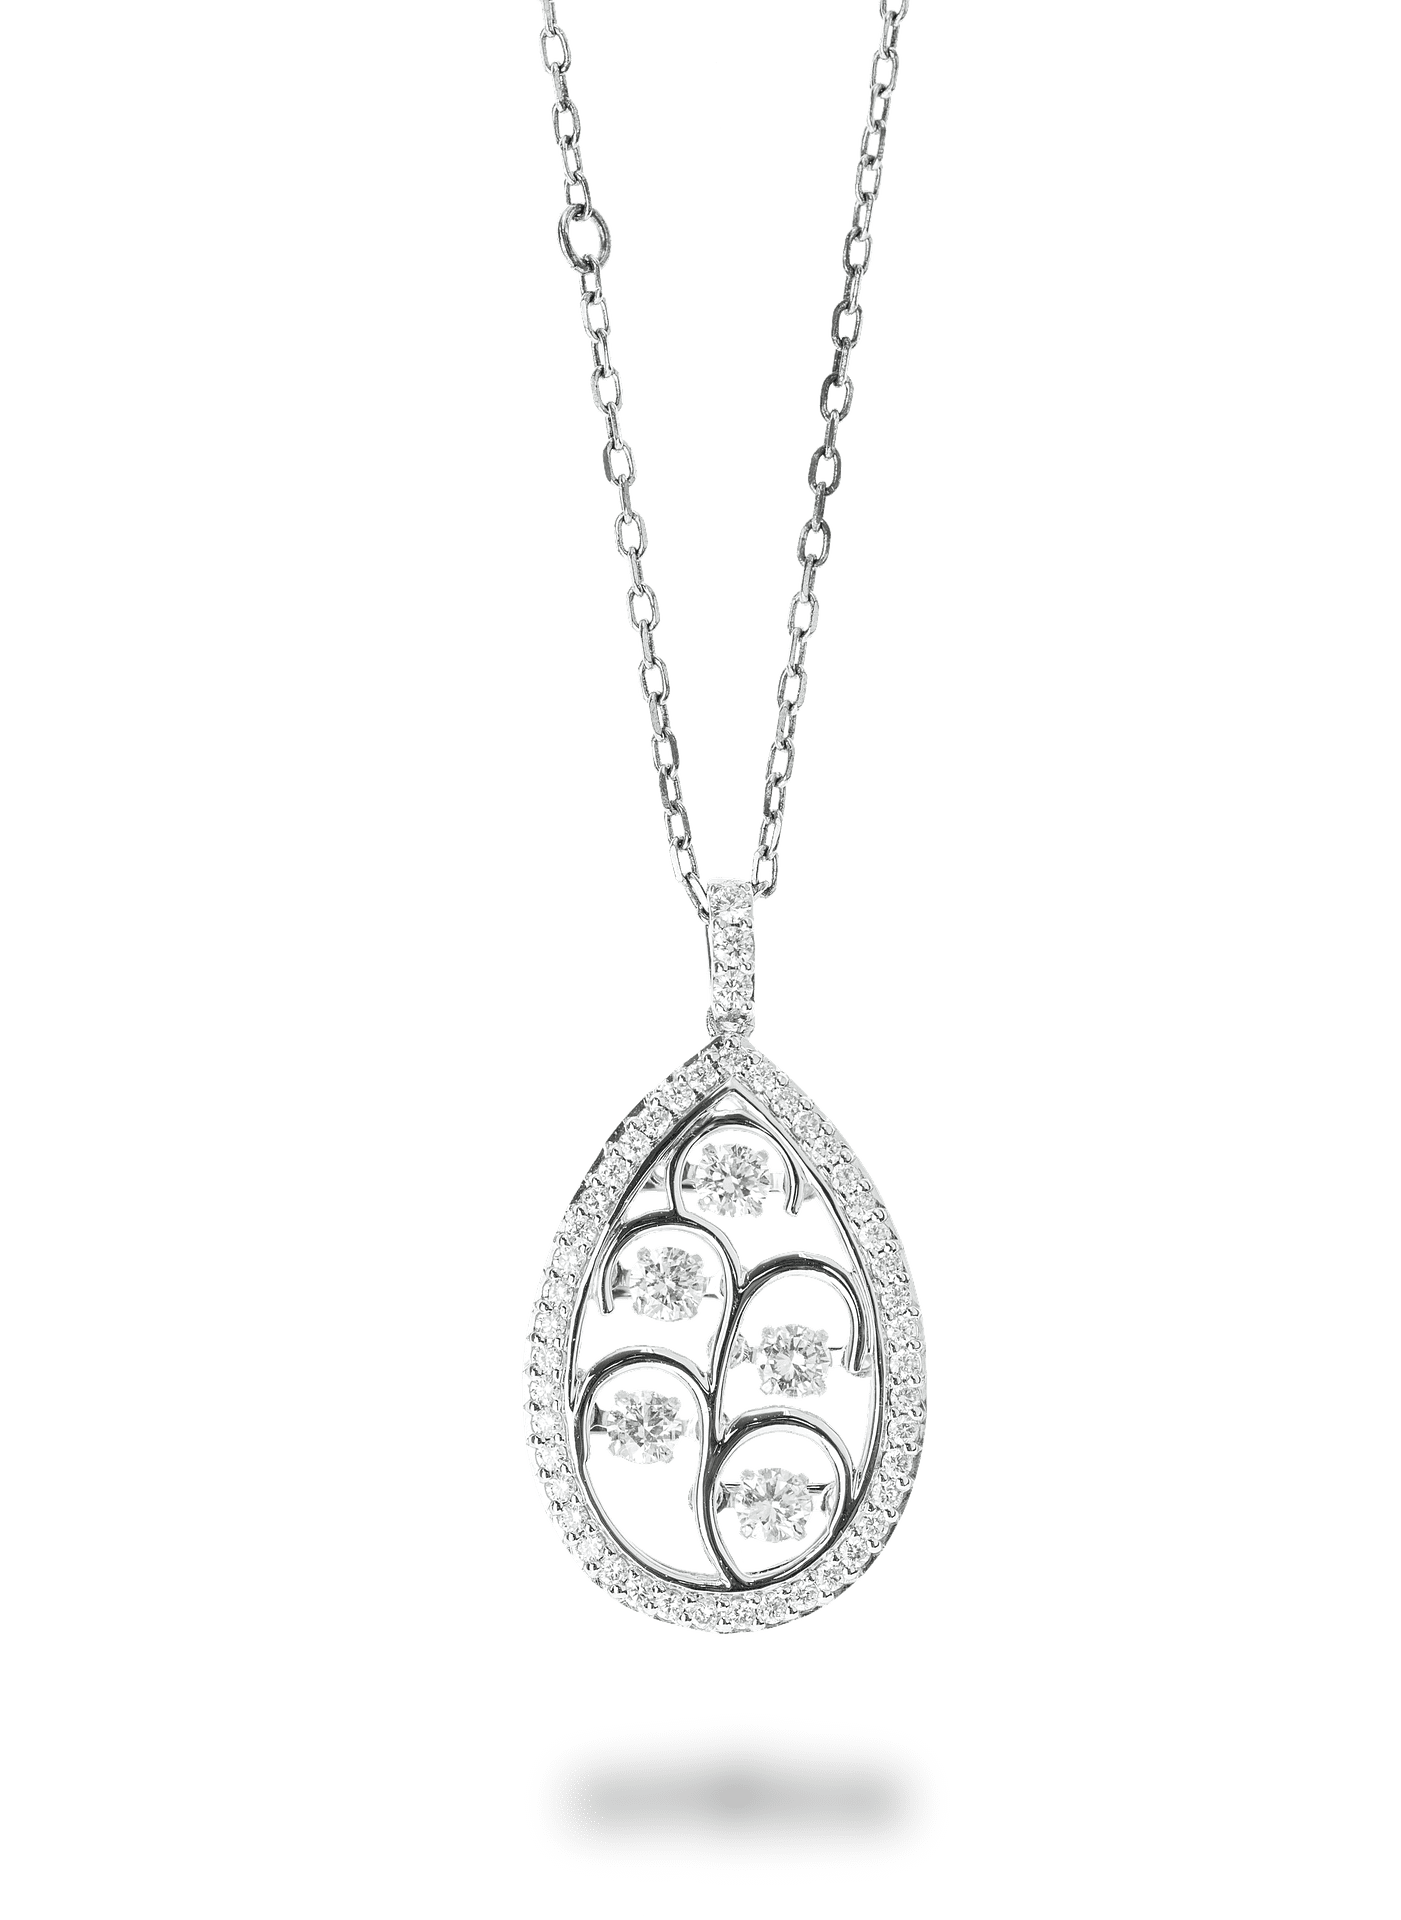 Pictured - A pendant diamond jewel | Source: Pixabay 